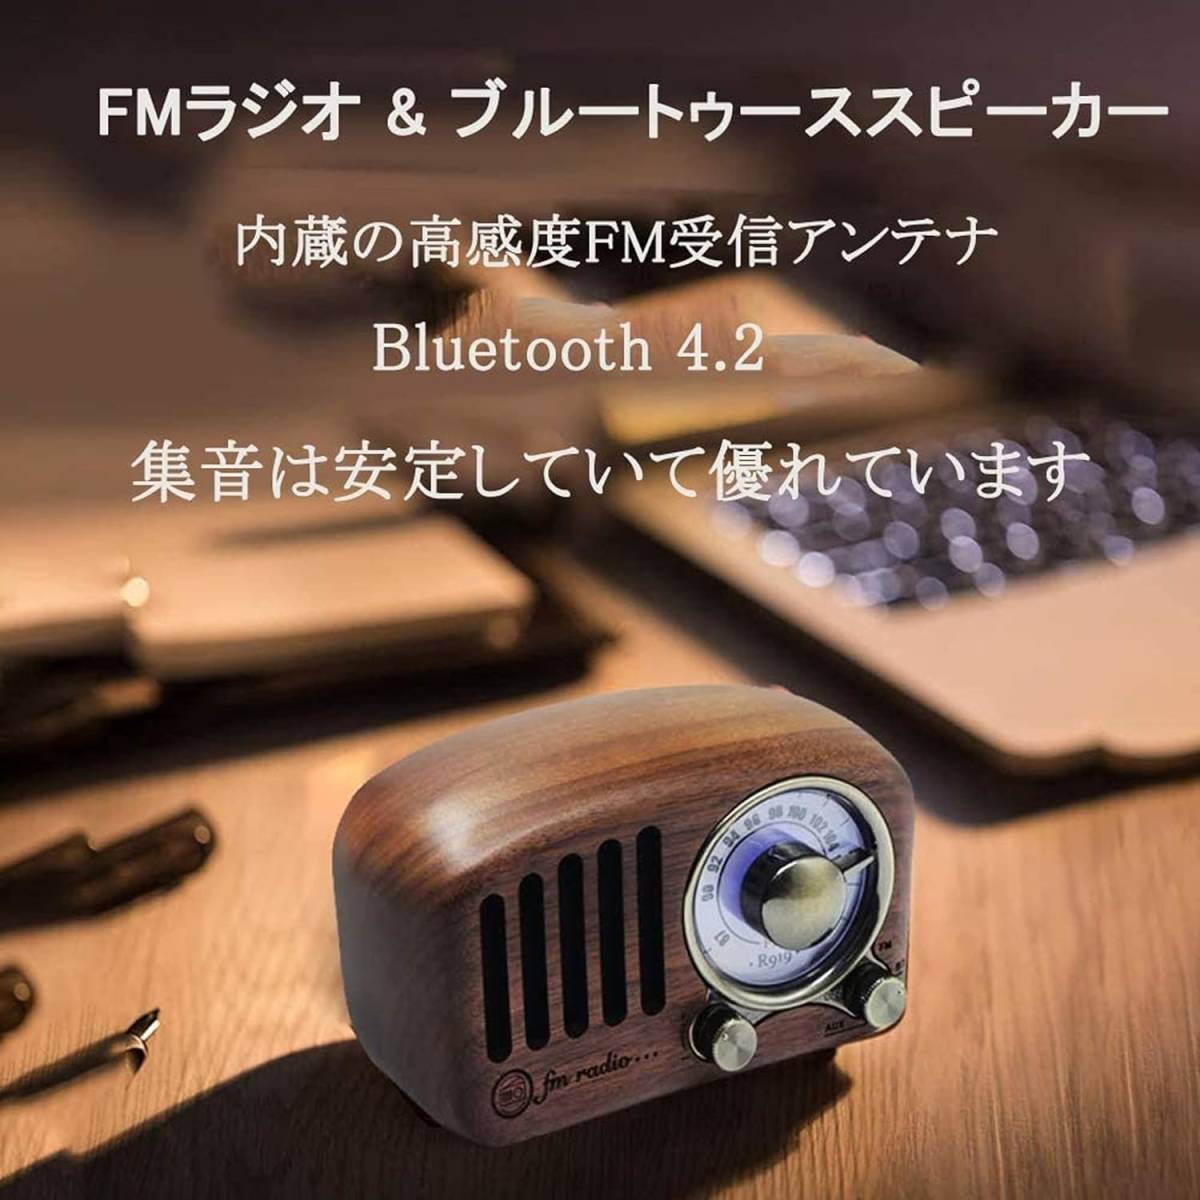  retro mobile radio portable radio FM wooden USB rechargeable Brown stylish large volume small size Minya geo Bluetooth wonderful present . you .